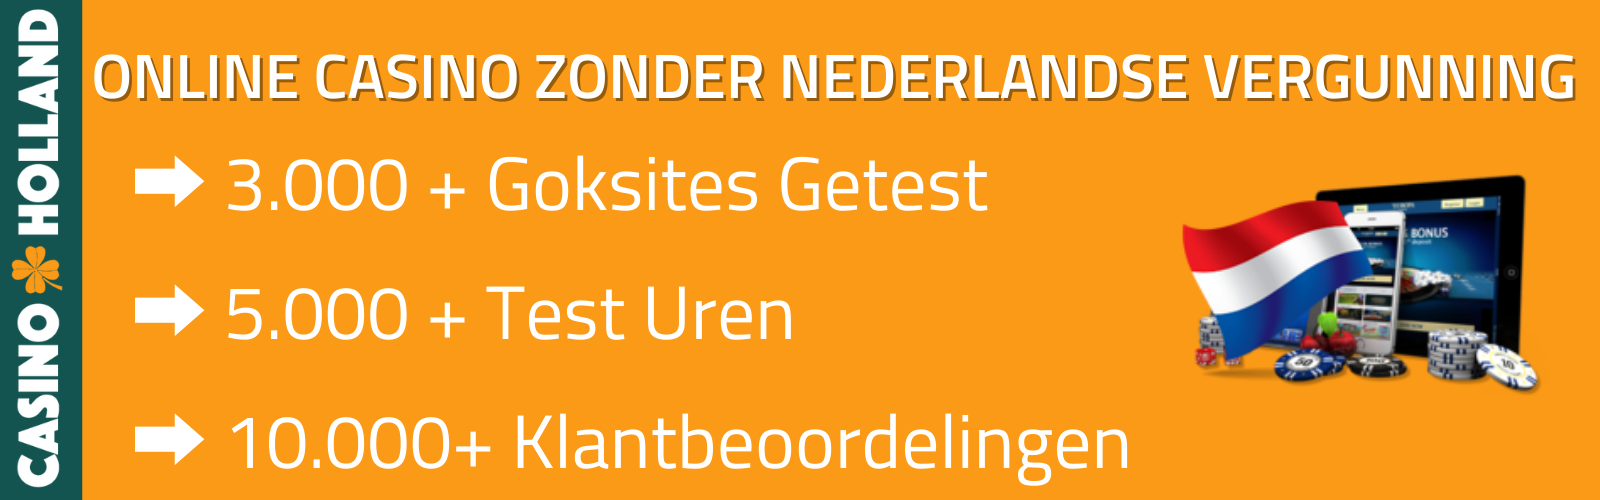 best online casino zonder nederlandse vergunning